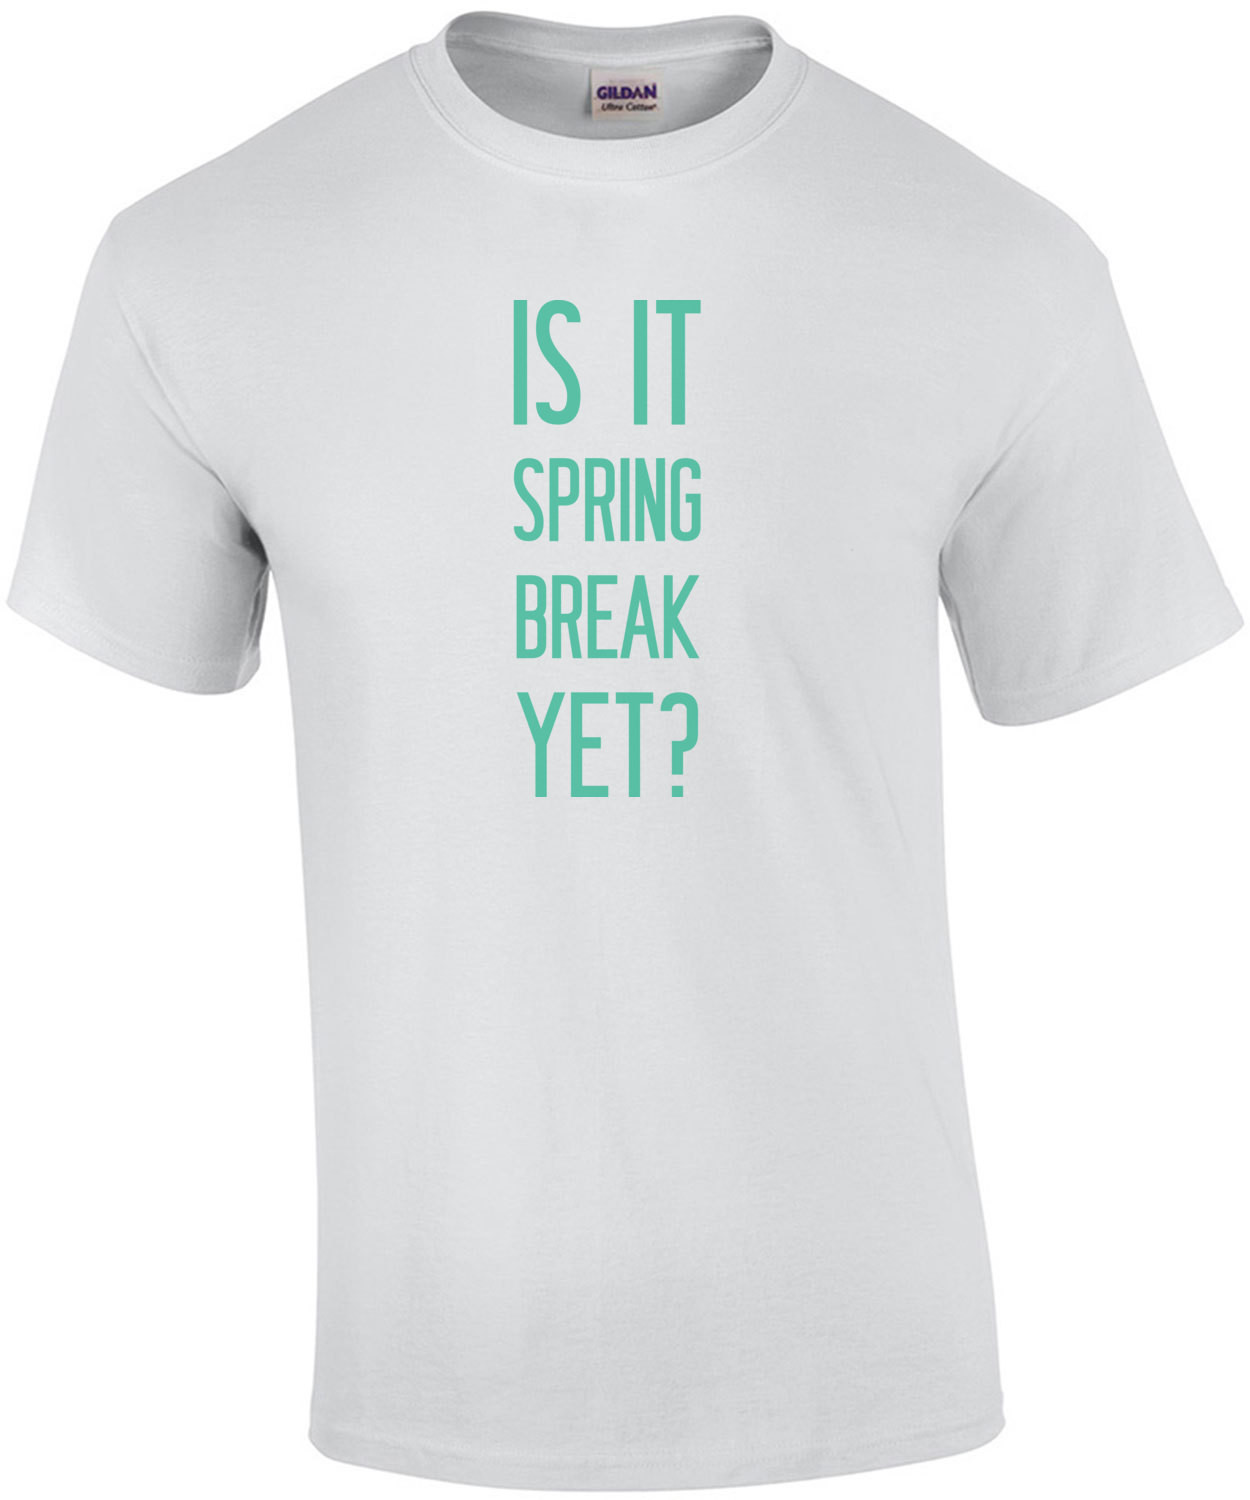 Is it spring break yet? Funny T-Shirt